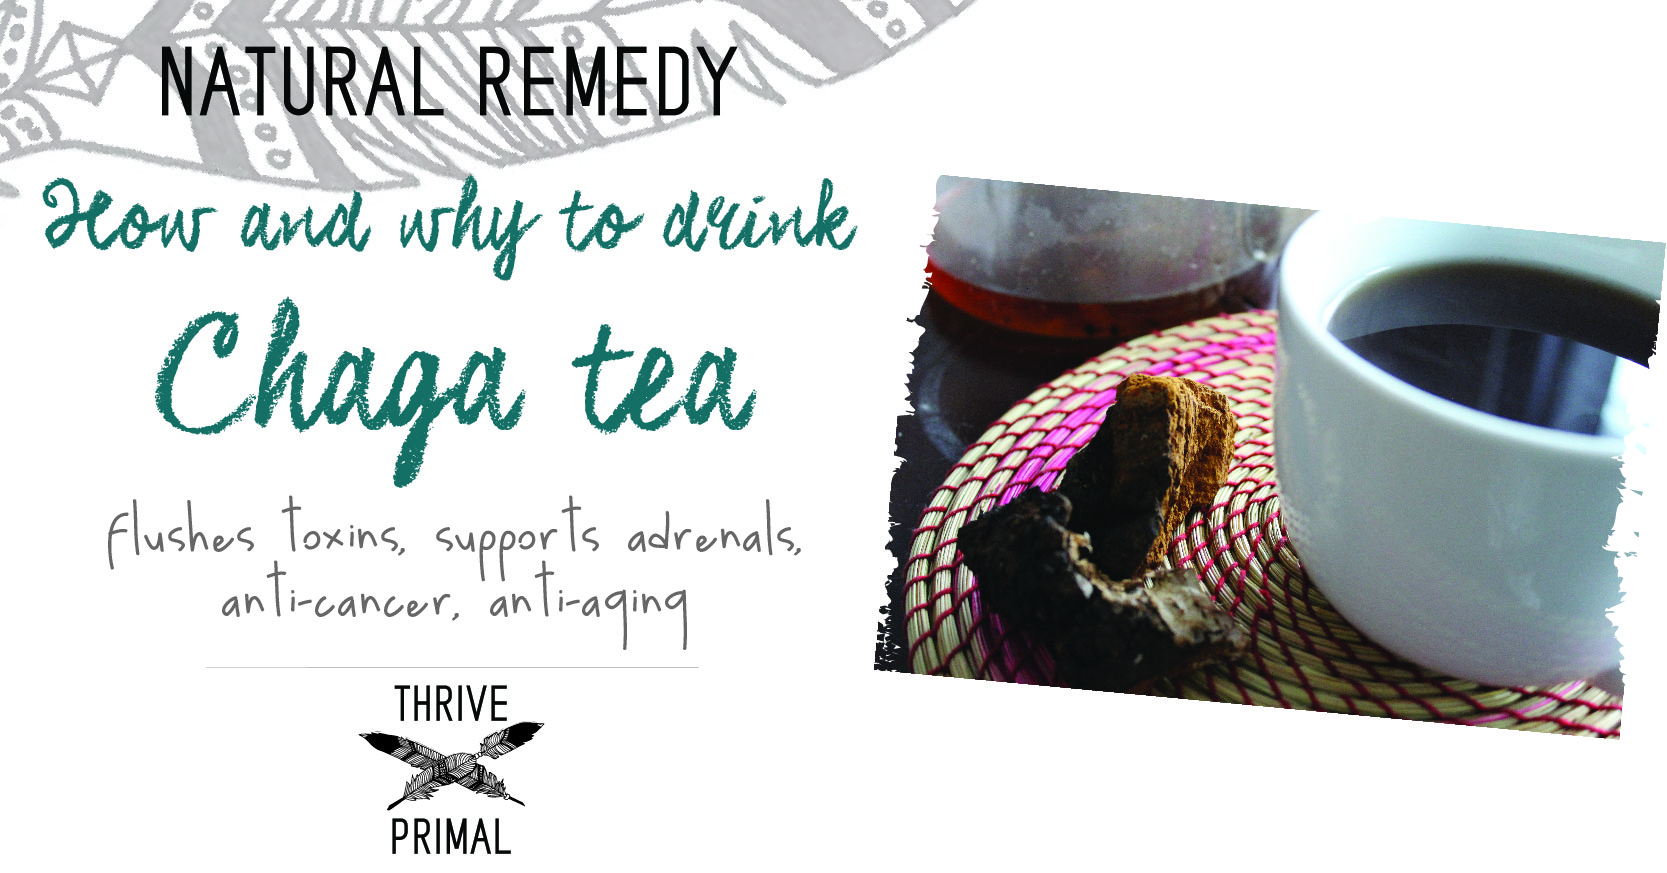 Thrive Primal - chaga tea remedy